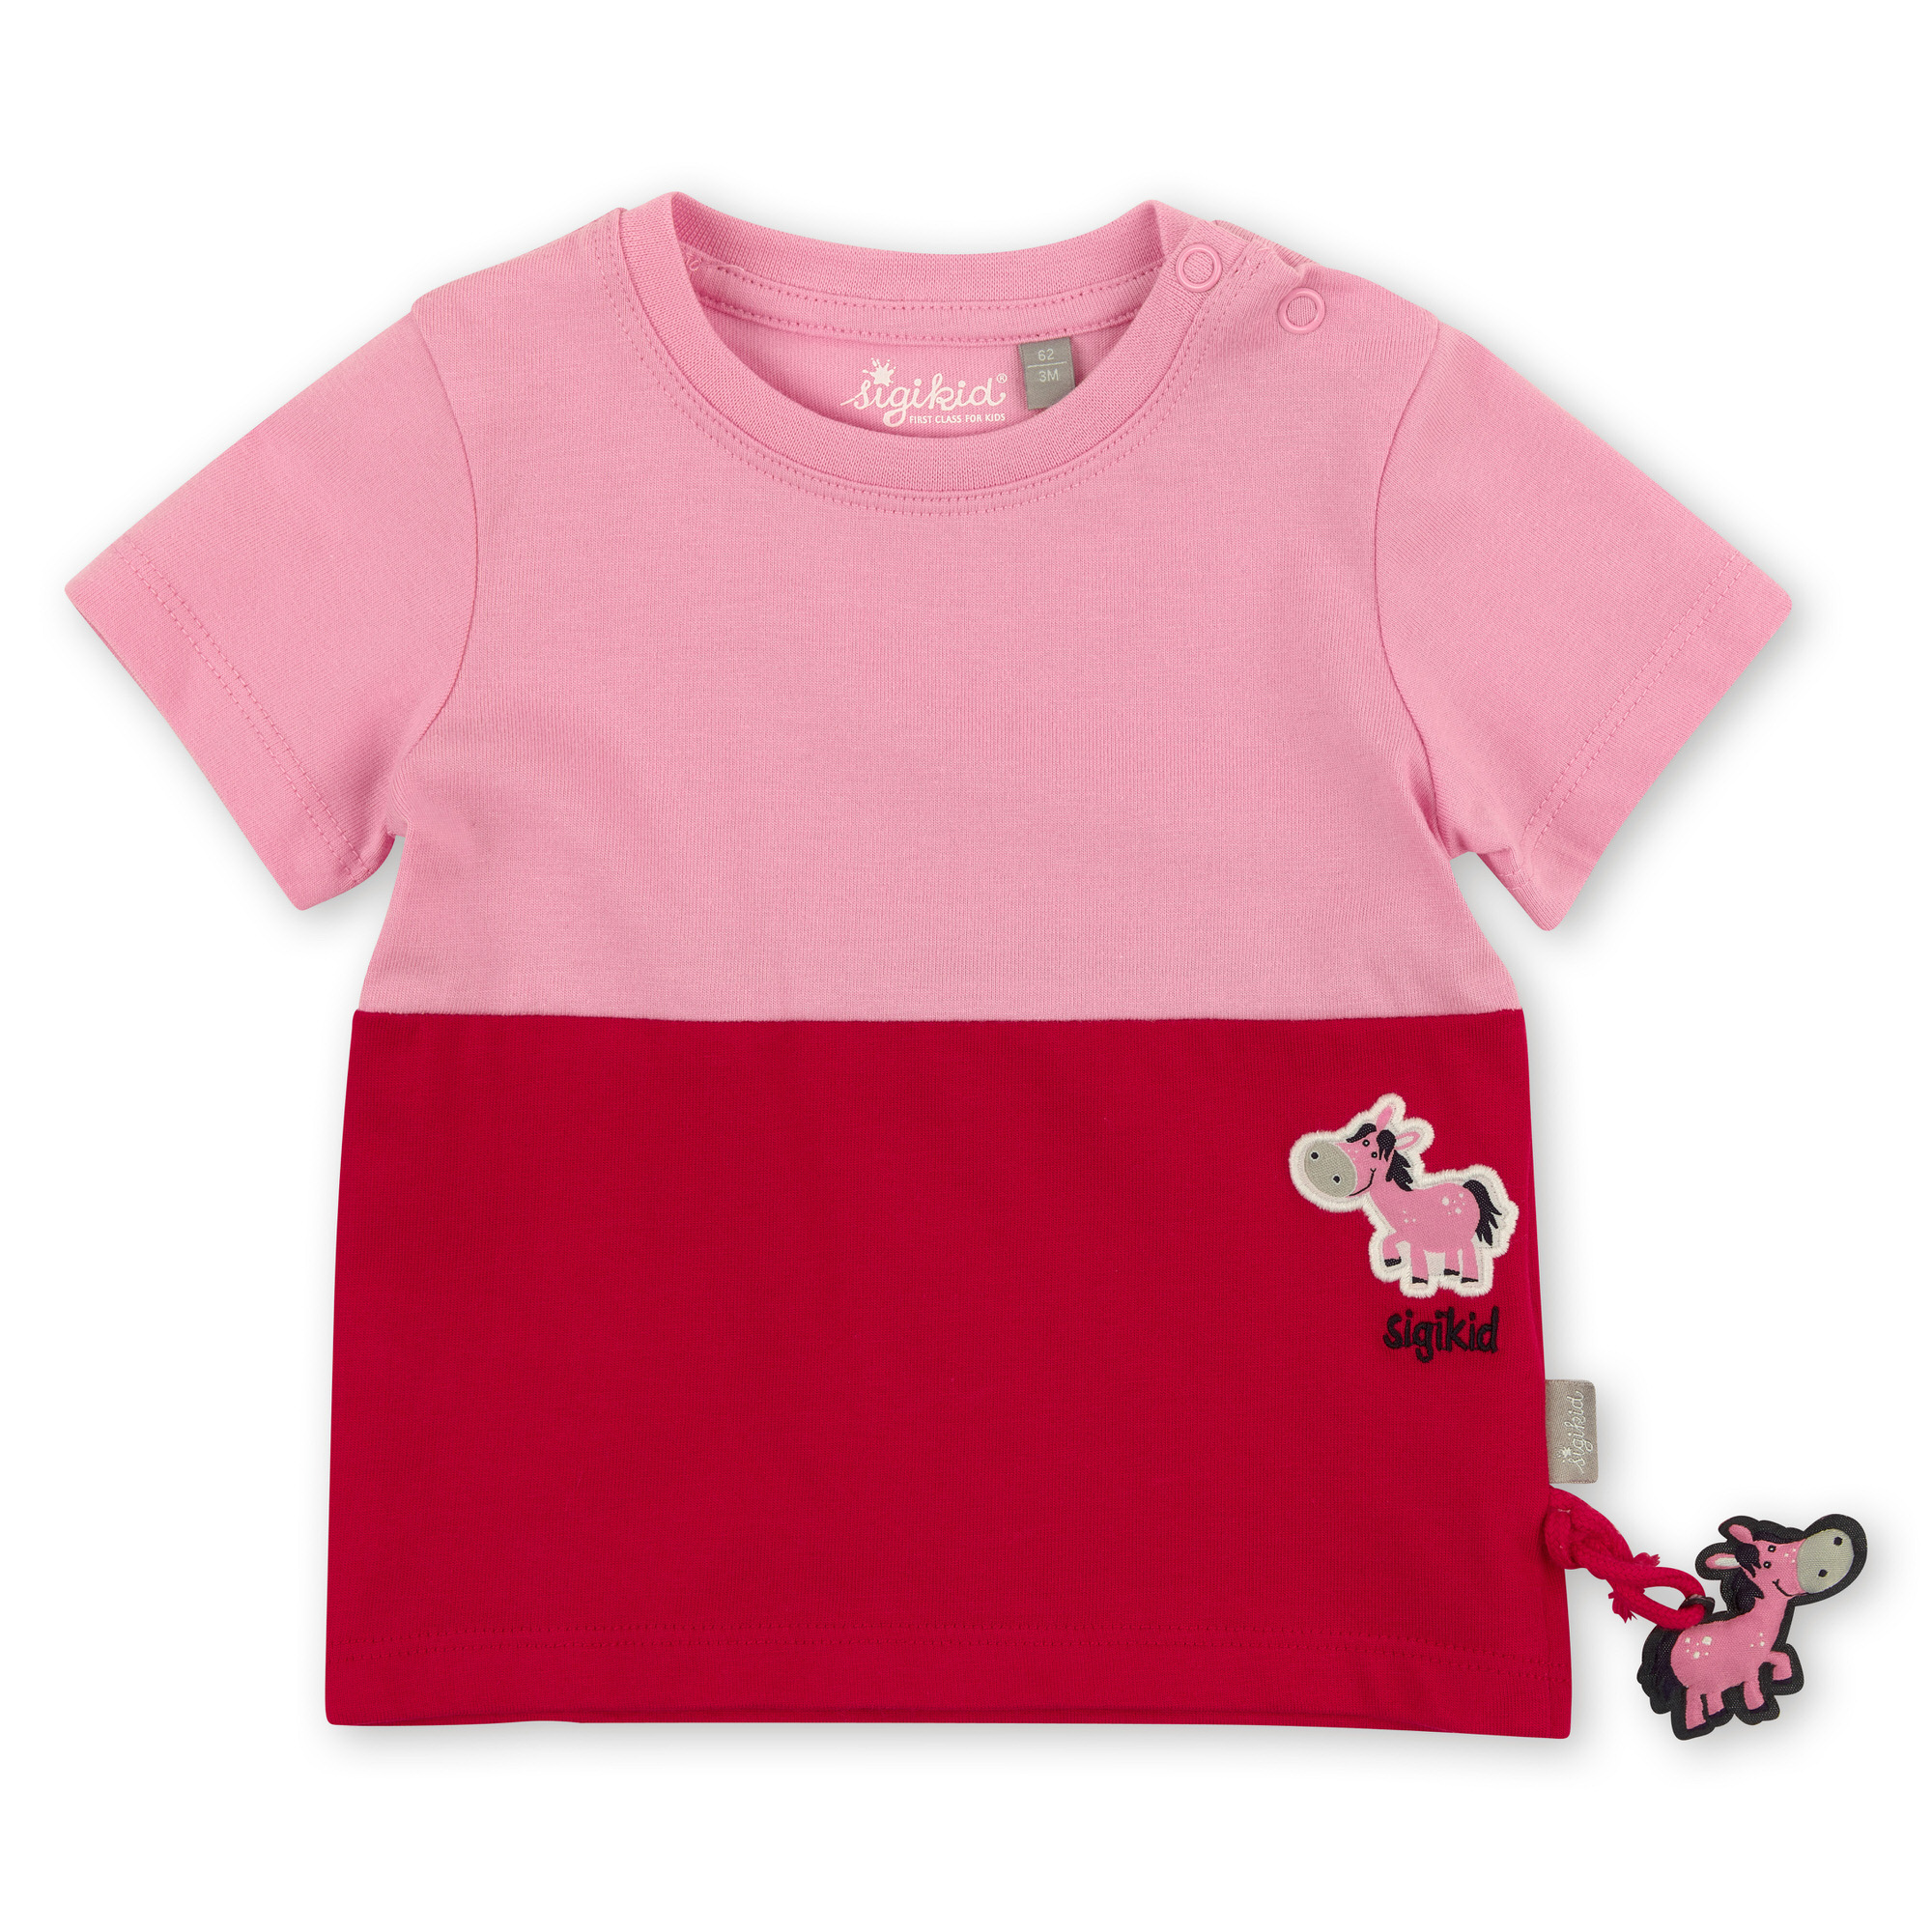 Baby T-Shirt Colour Blocking rosa/rot mit Pony Motiv